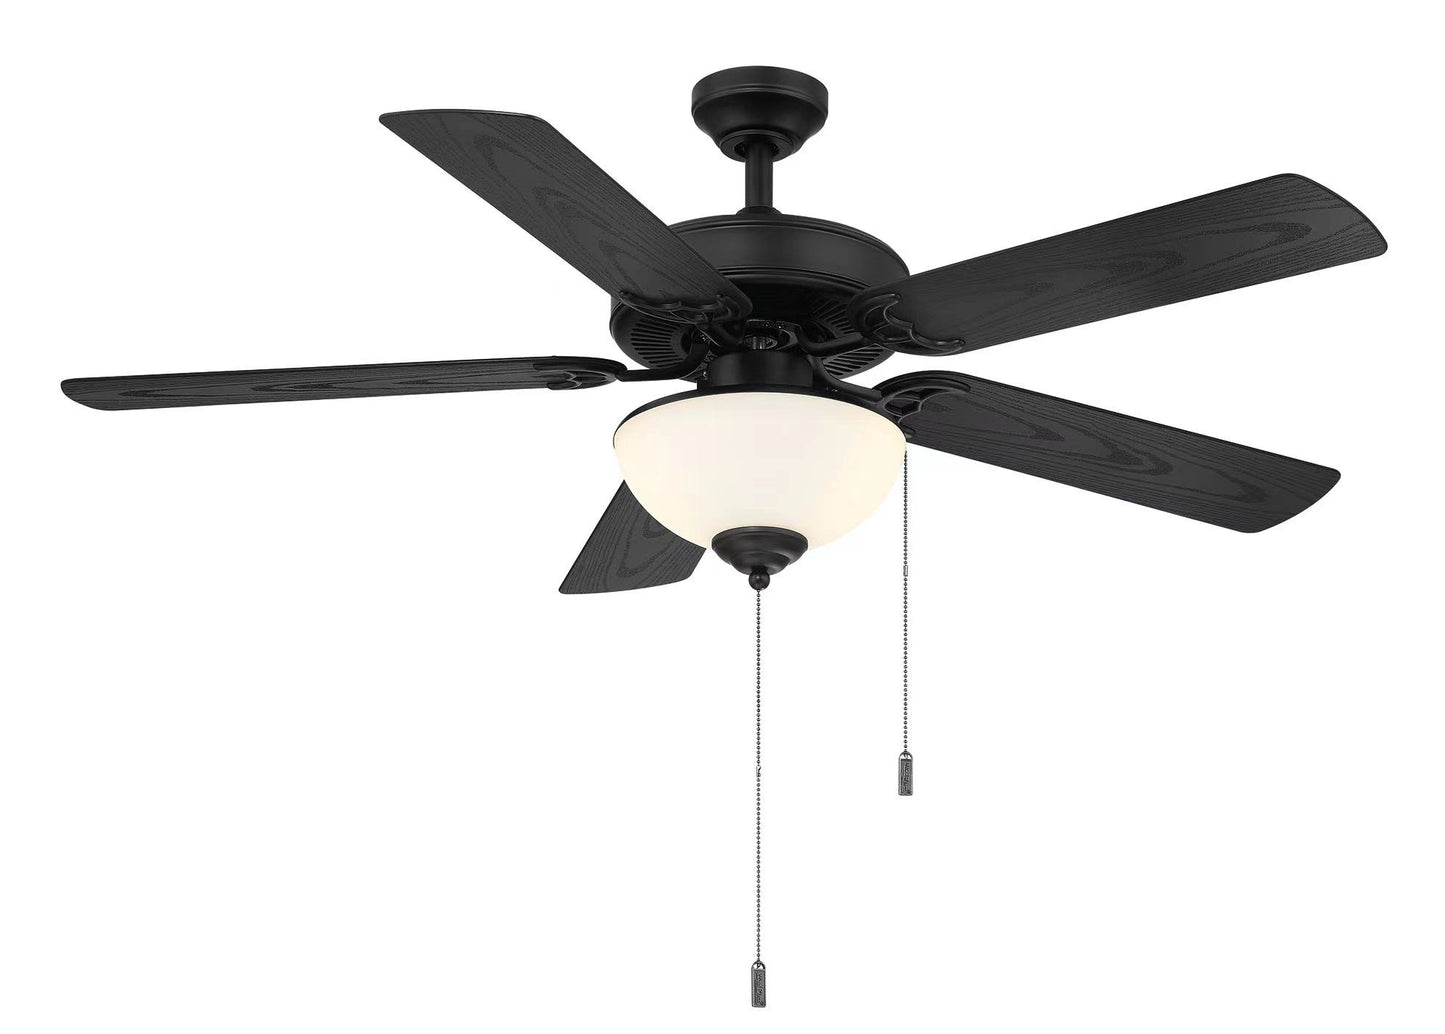 Wind River Fans Dalton 52 Inch Indoor/Outdoor Ceiling Fan, 3 Speed, 120V